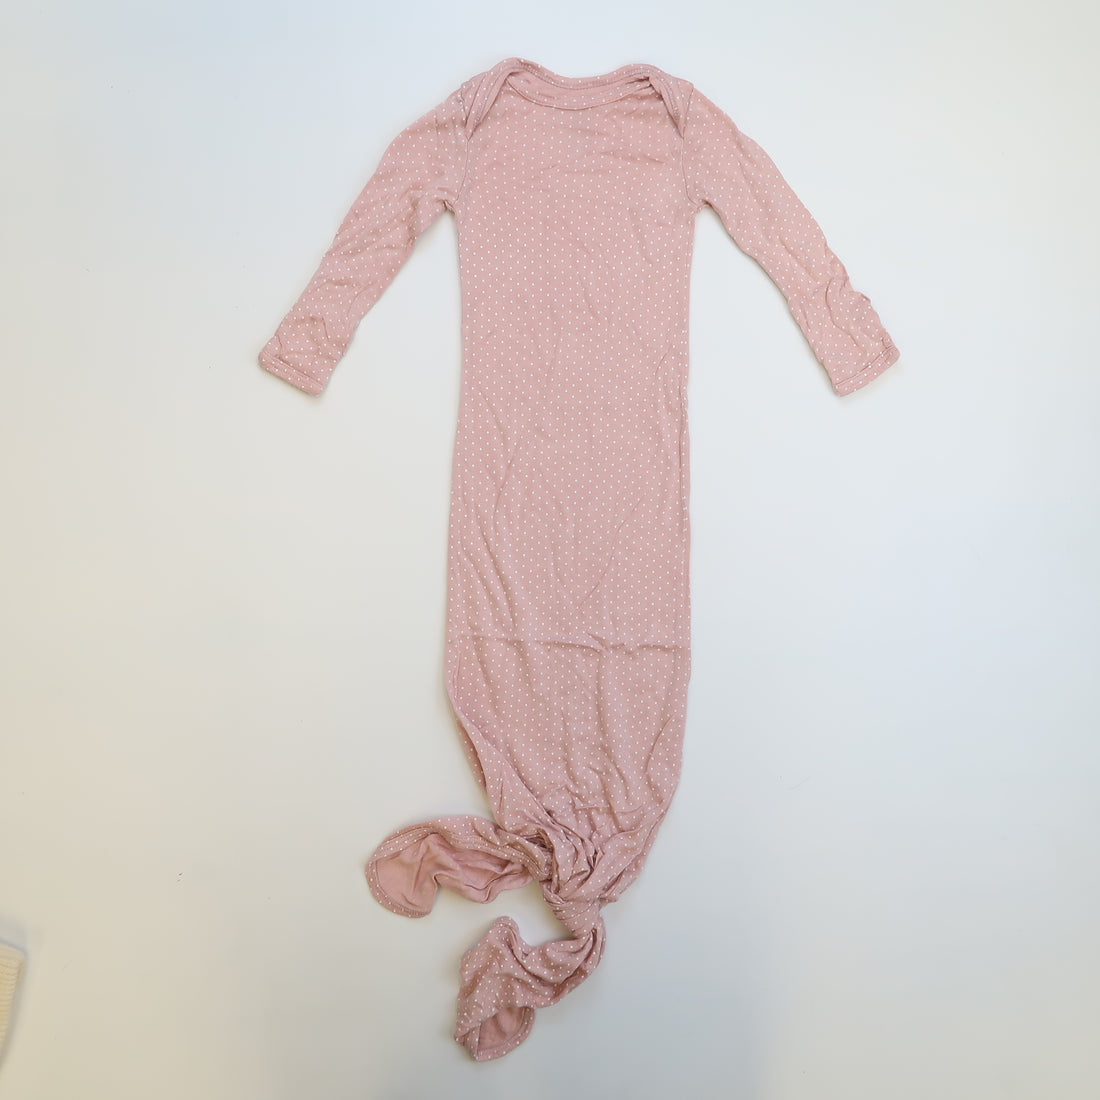 Solly Baby - Sleepwear (0-3M)